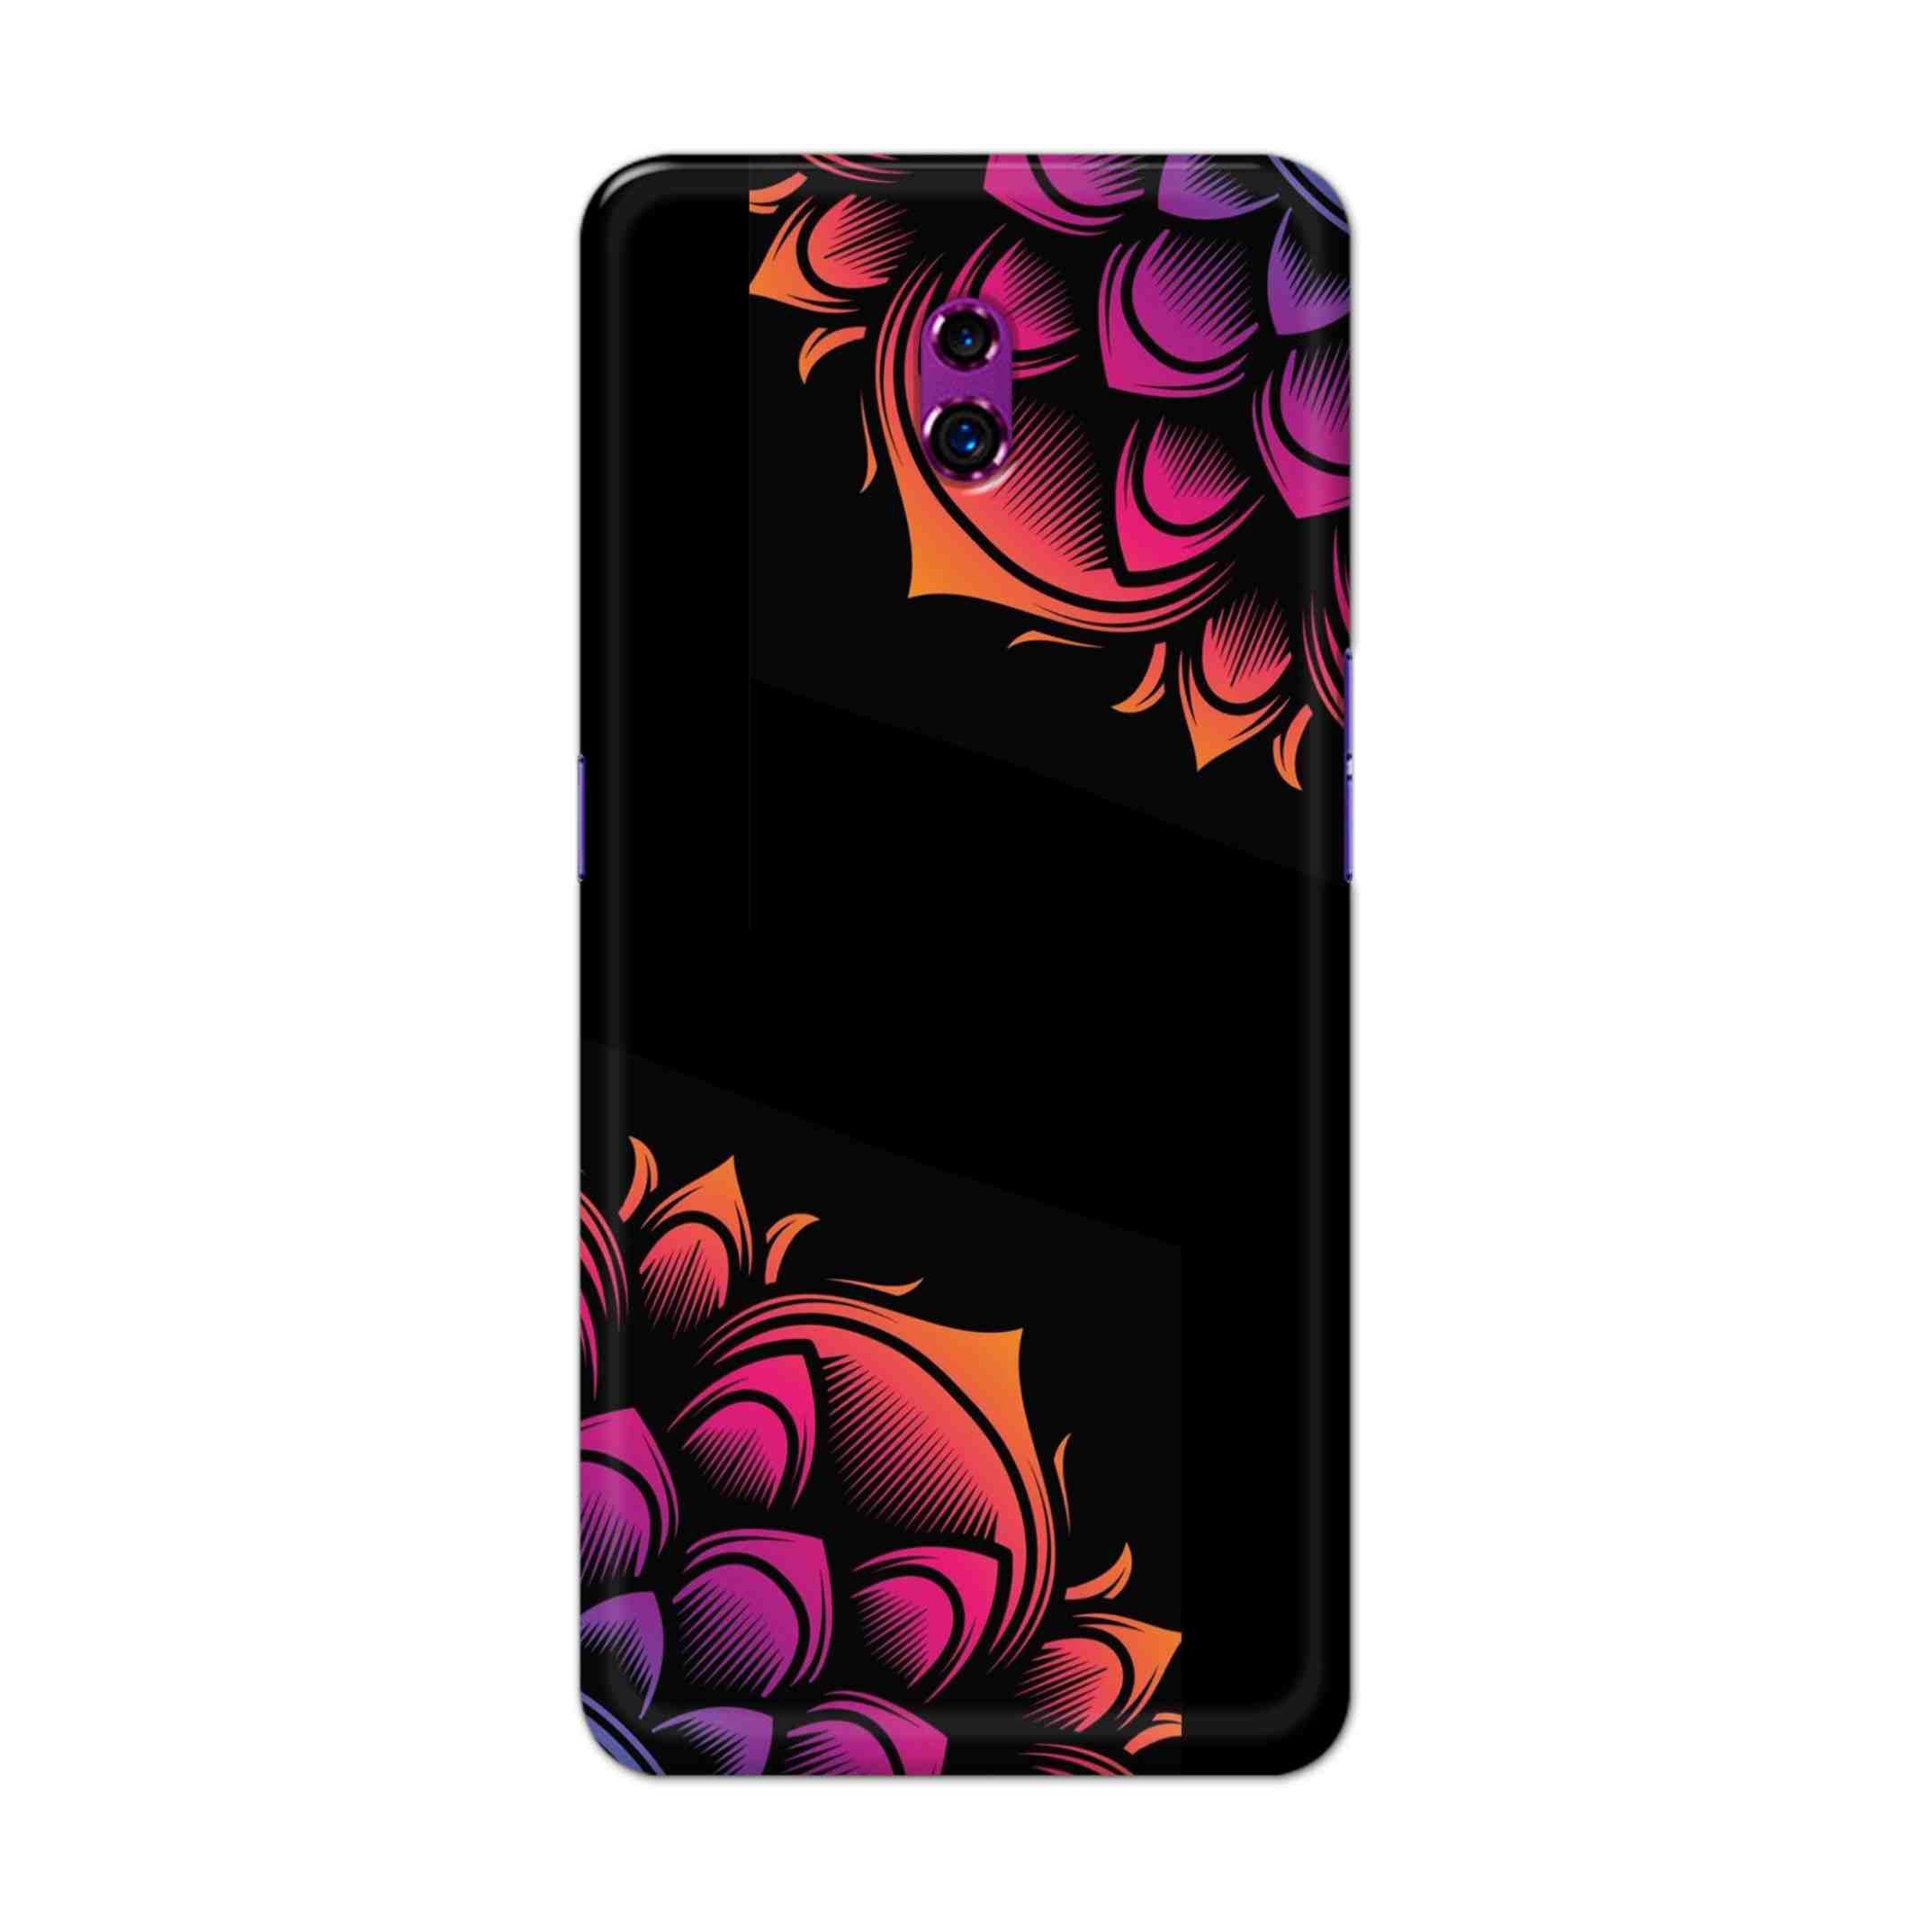 Buy Mandala Hard Back Mobile Phone Case Cover For Oppo Reno Online